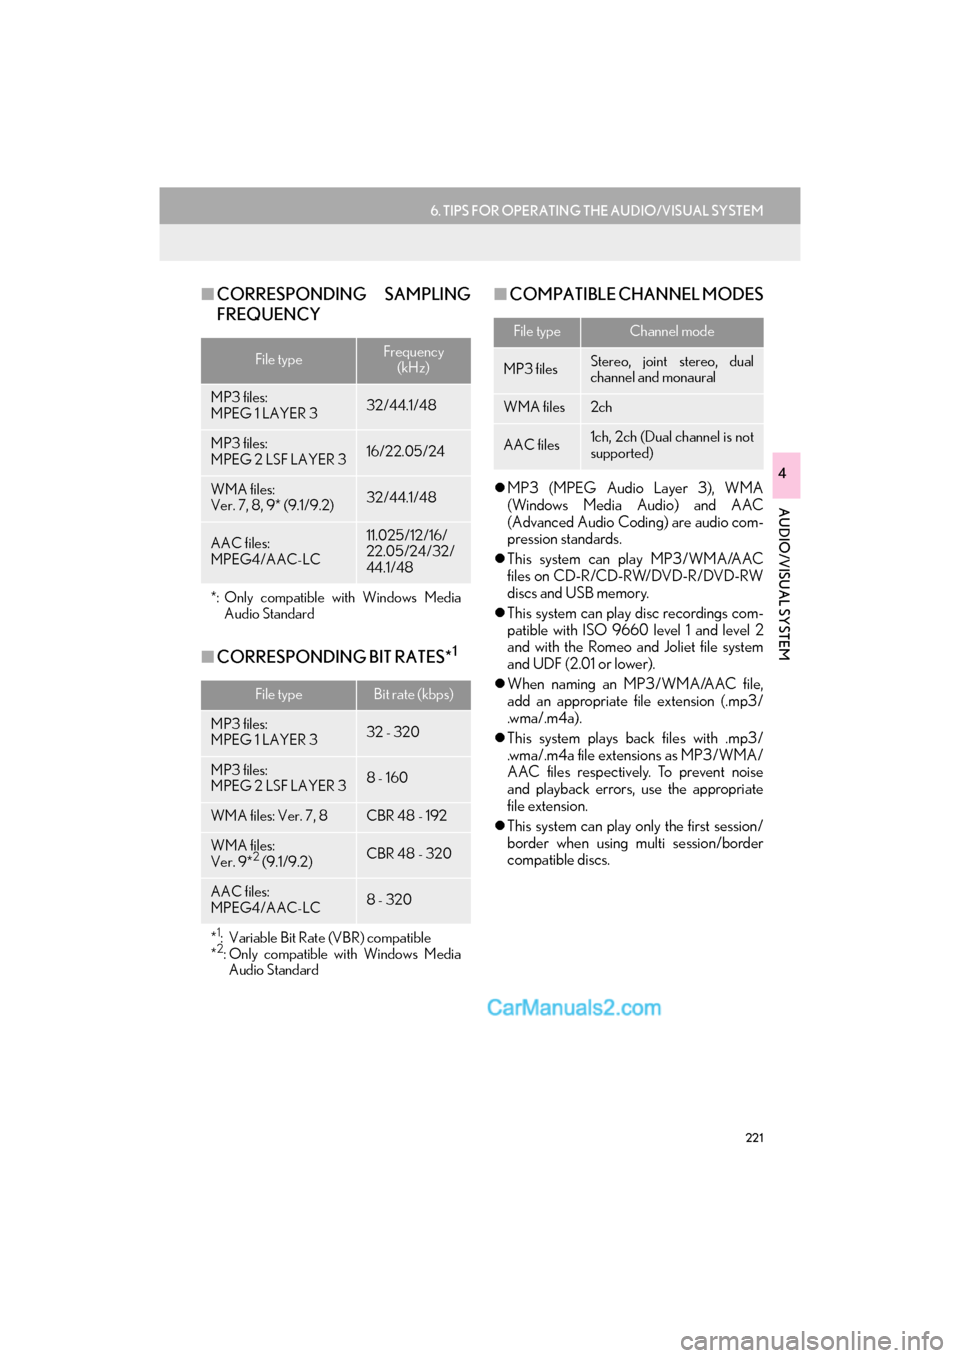 Lexus GS F 2017  Navigation Manual 221
6. TIPS FOR OPERATING THE AUDIO/VISUAL SYSTEM
GS_Navi+MM_OM30F99U_(U)16.07.11     14:00
AUDIO/VISUAL SYSTEM
4
■CORRESPONDING SAMPLING
FREQUENCY
■ CORRESPONDING BIT RATES*
1
■COMPATIBLE CHANN